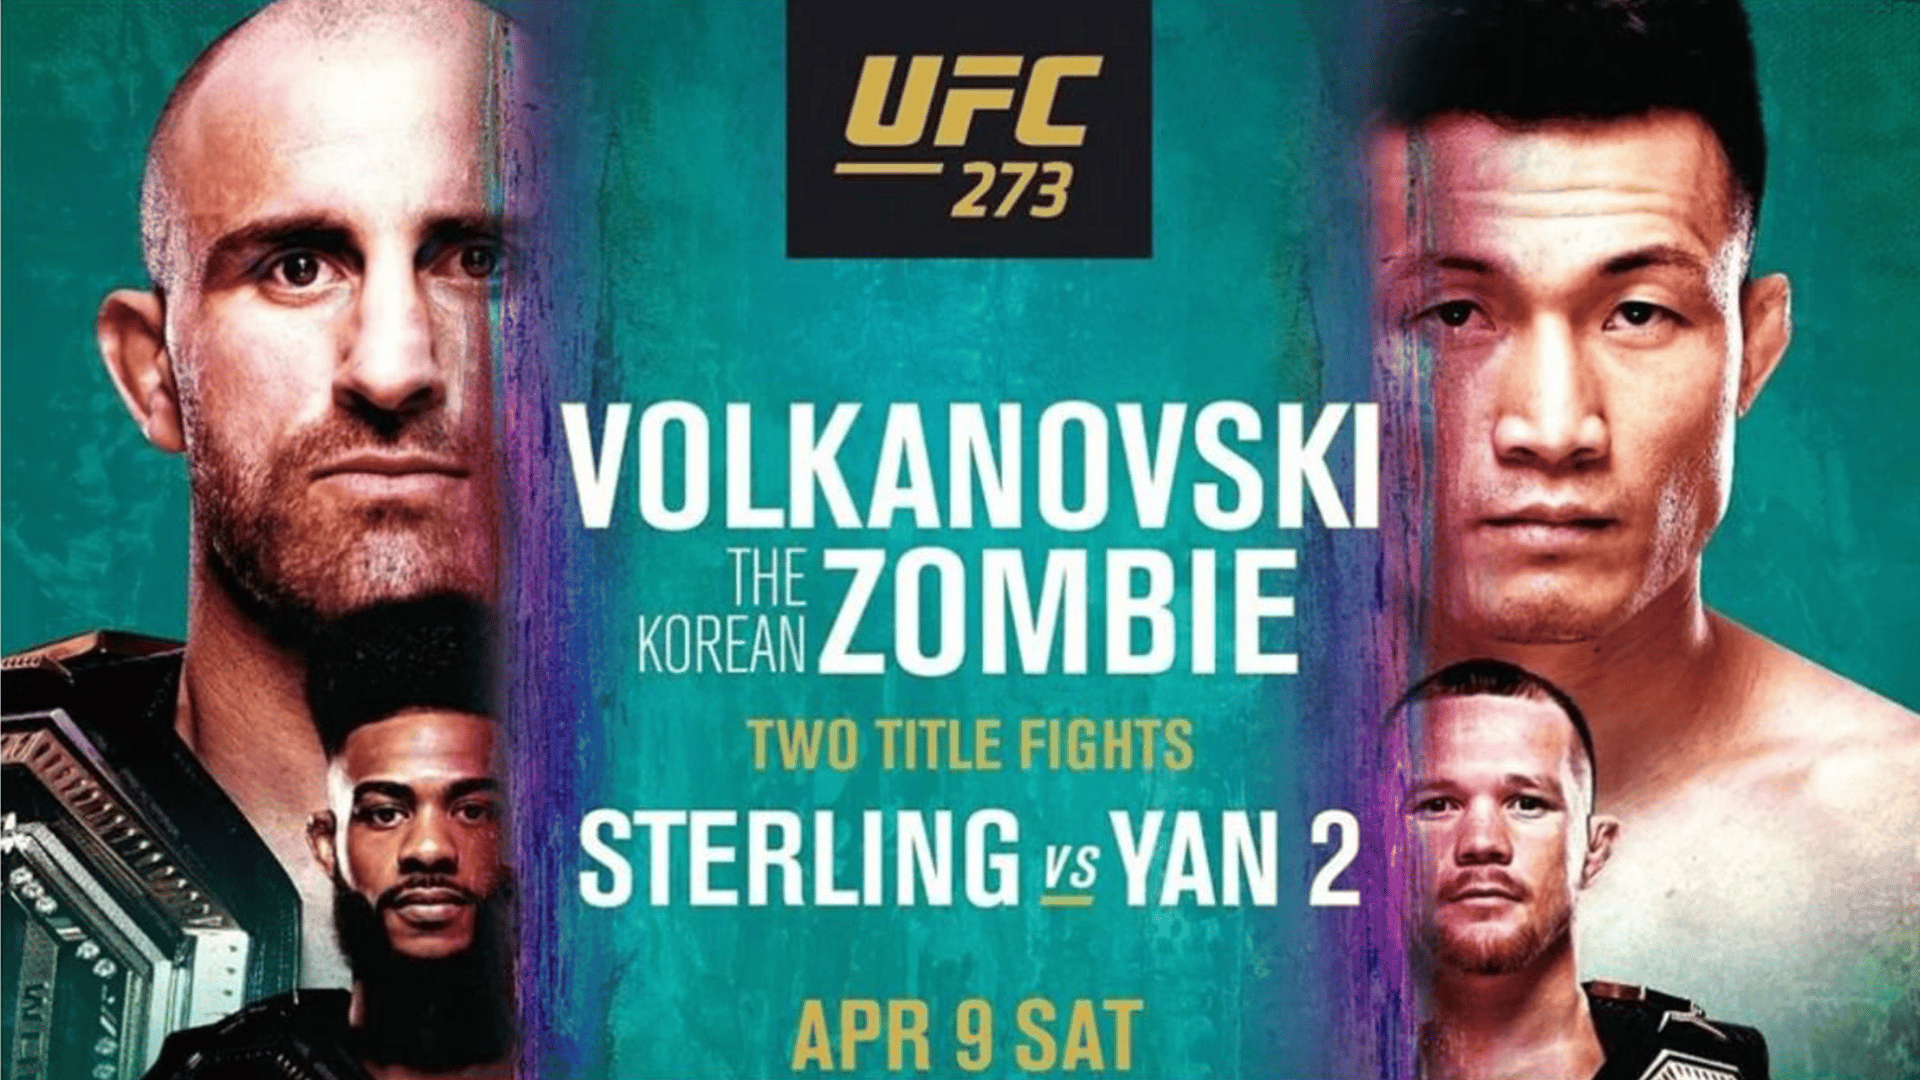 UFC Poster 273 Image